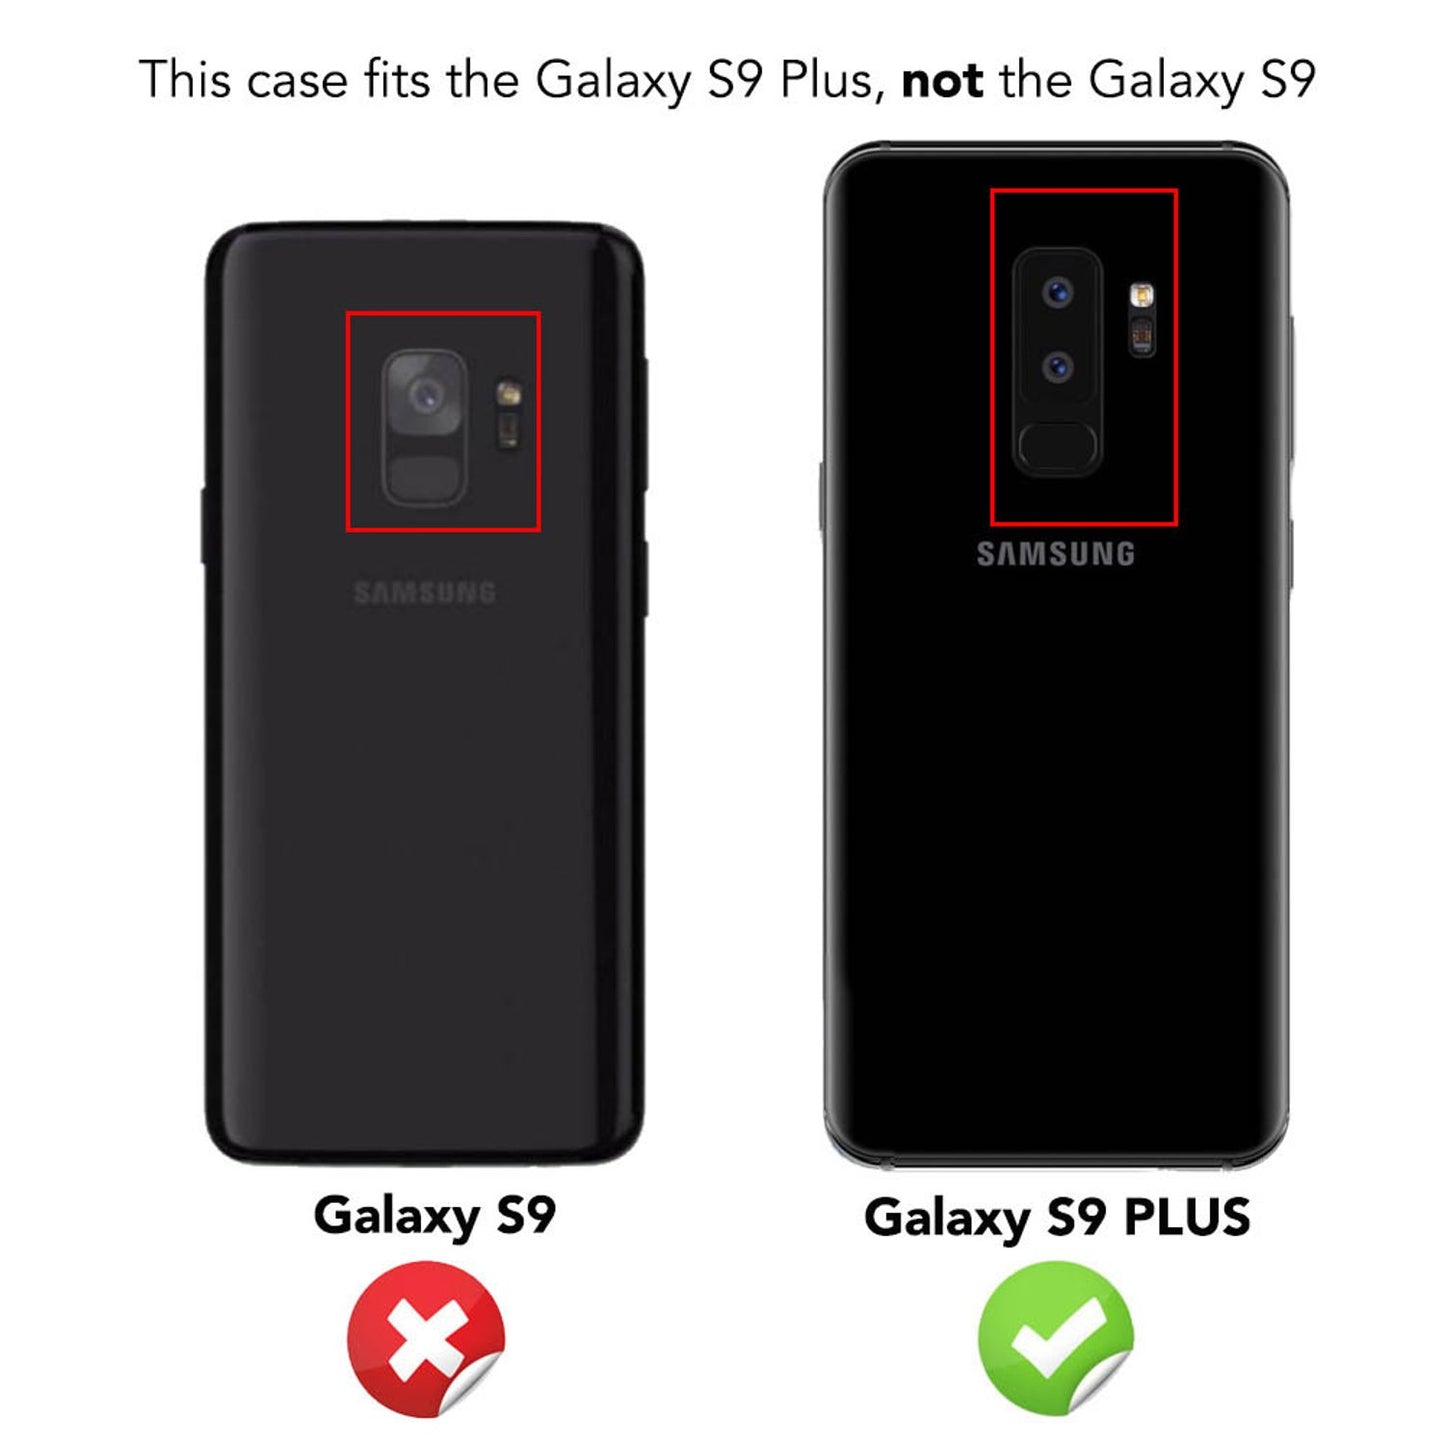 NALIA Glitter Handy Hülle für Samsung Galaxy S9 Plus Glitzer Cover Silikon Case